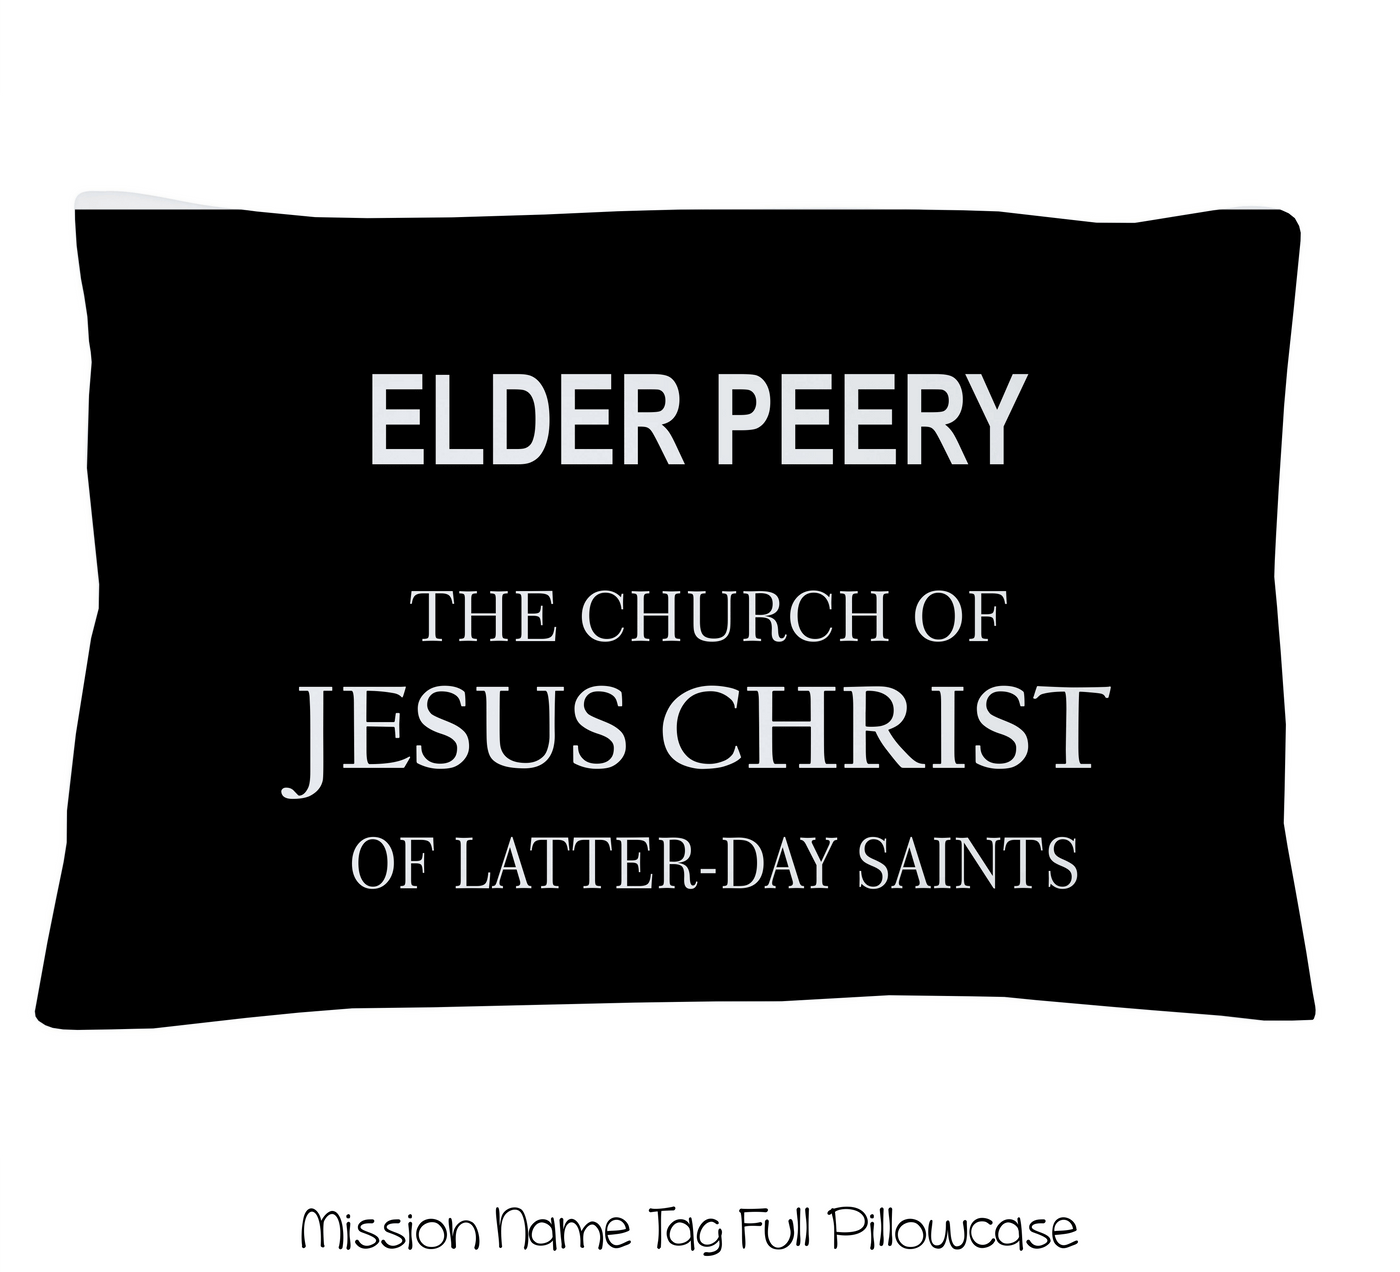 Missionary Name Tag Full Pillowcase